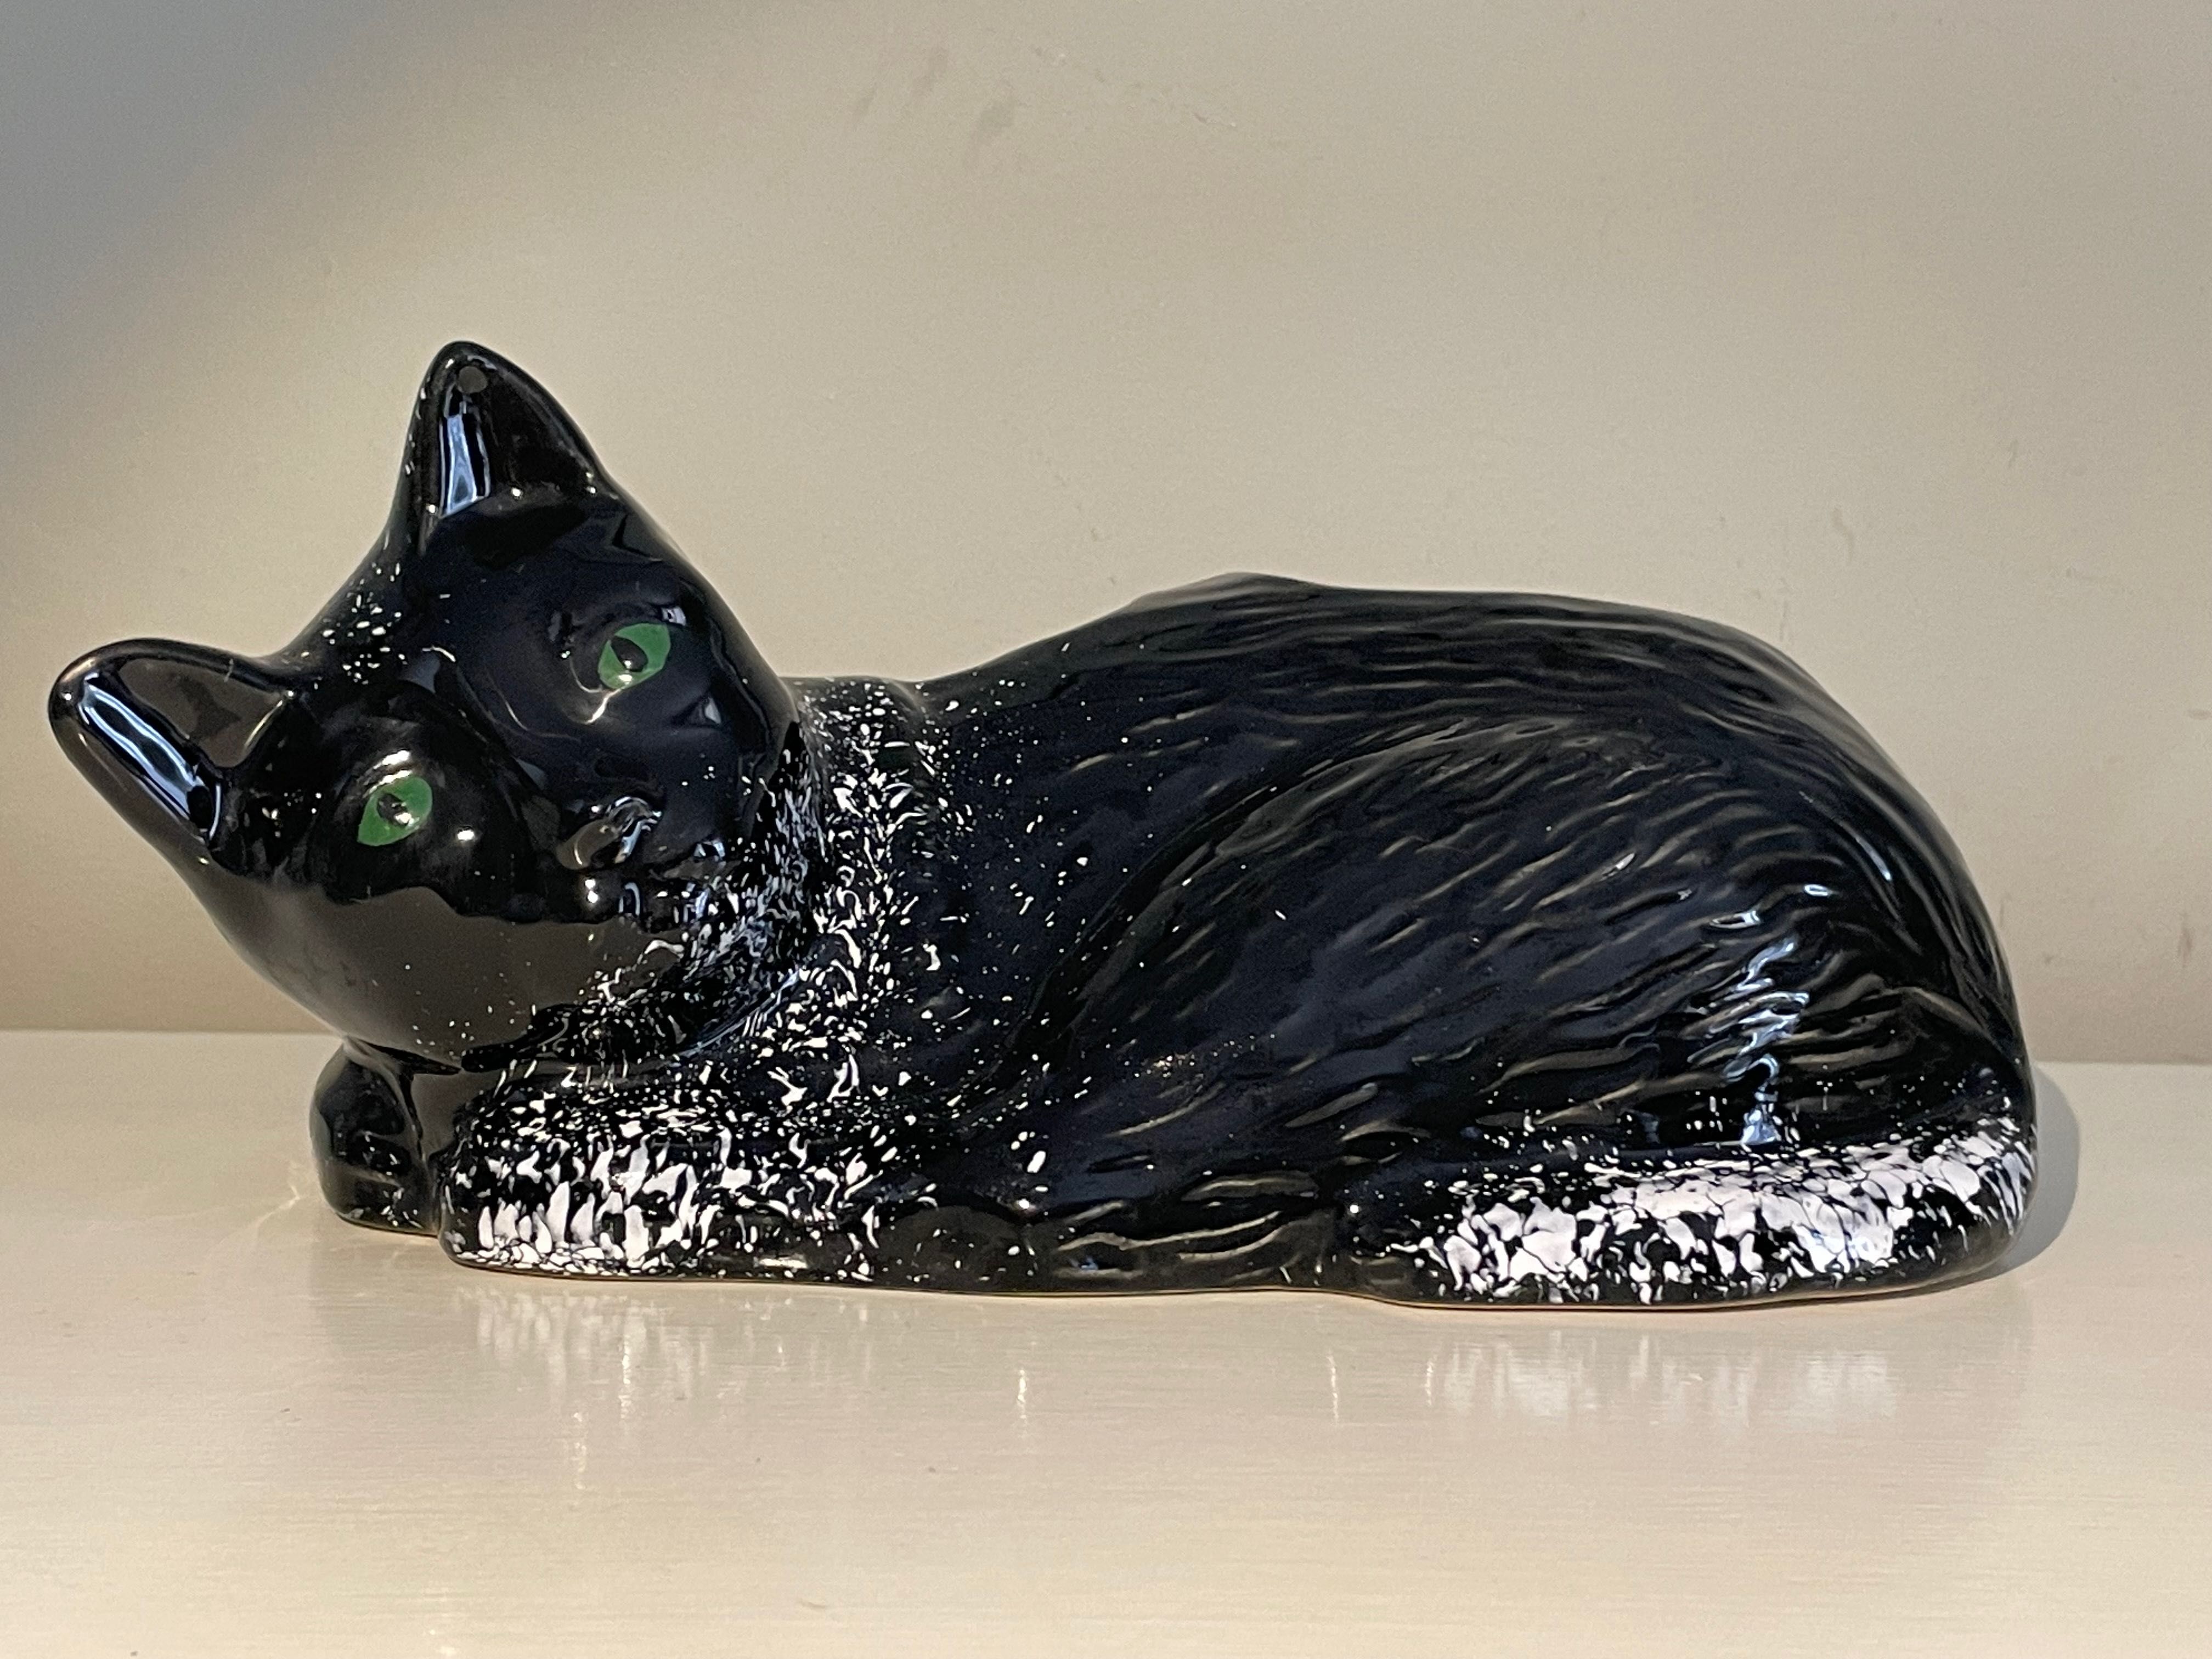 Piękny ceramiczny kot, doniczka, osłonka. Stara ceramika vintage